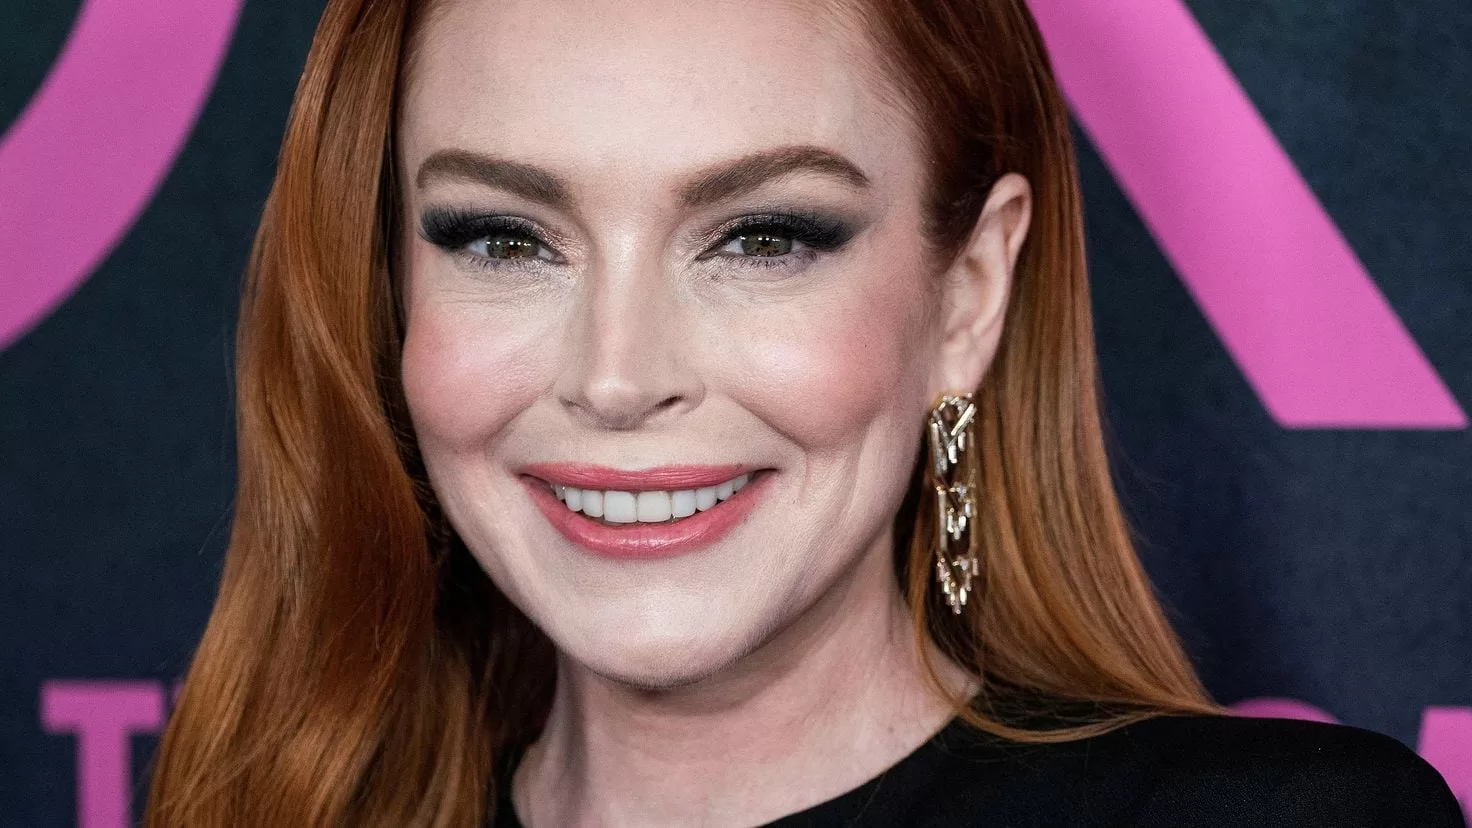 Lindsay Lohan earned half a million dollars for half a day's work on Mean Girls
